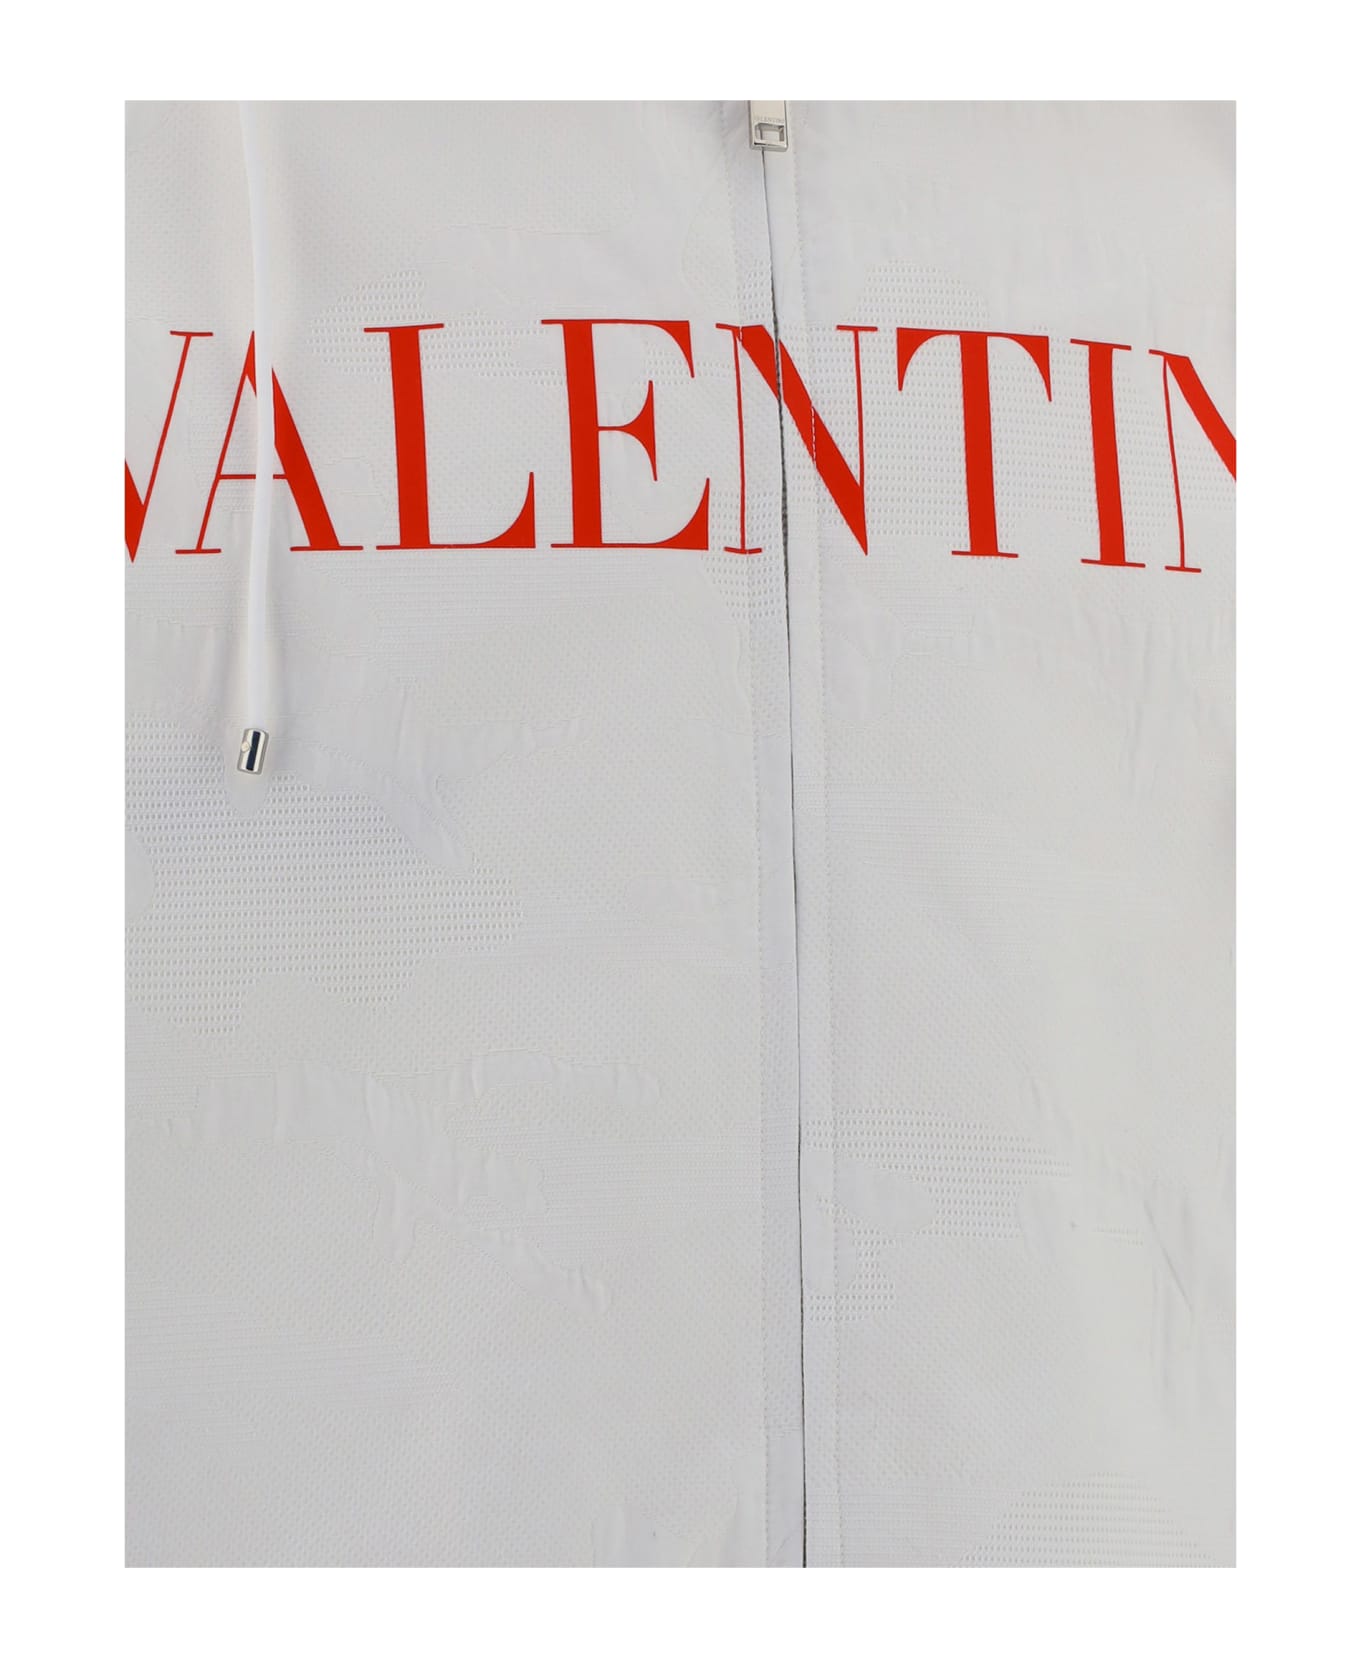 Valentino Cotton Logo Jacket - White ジャケット